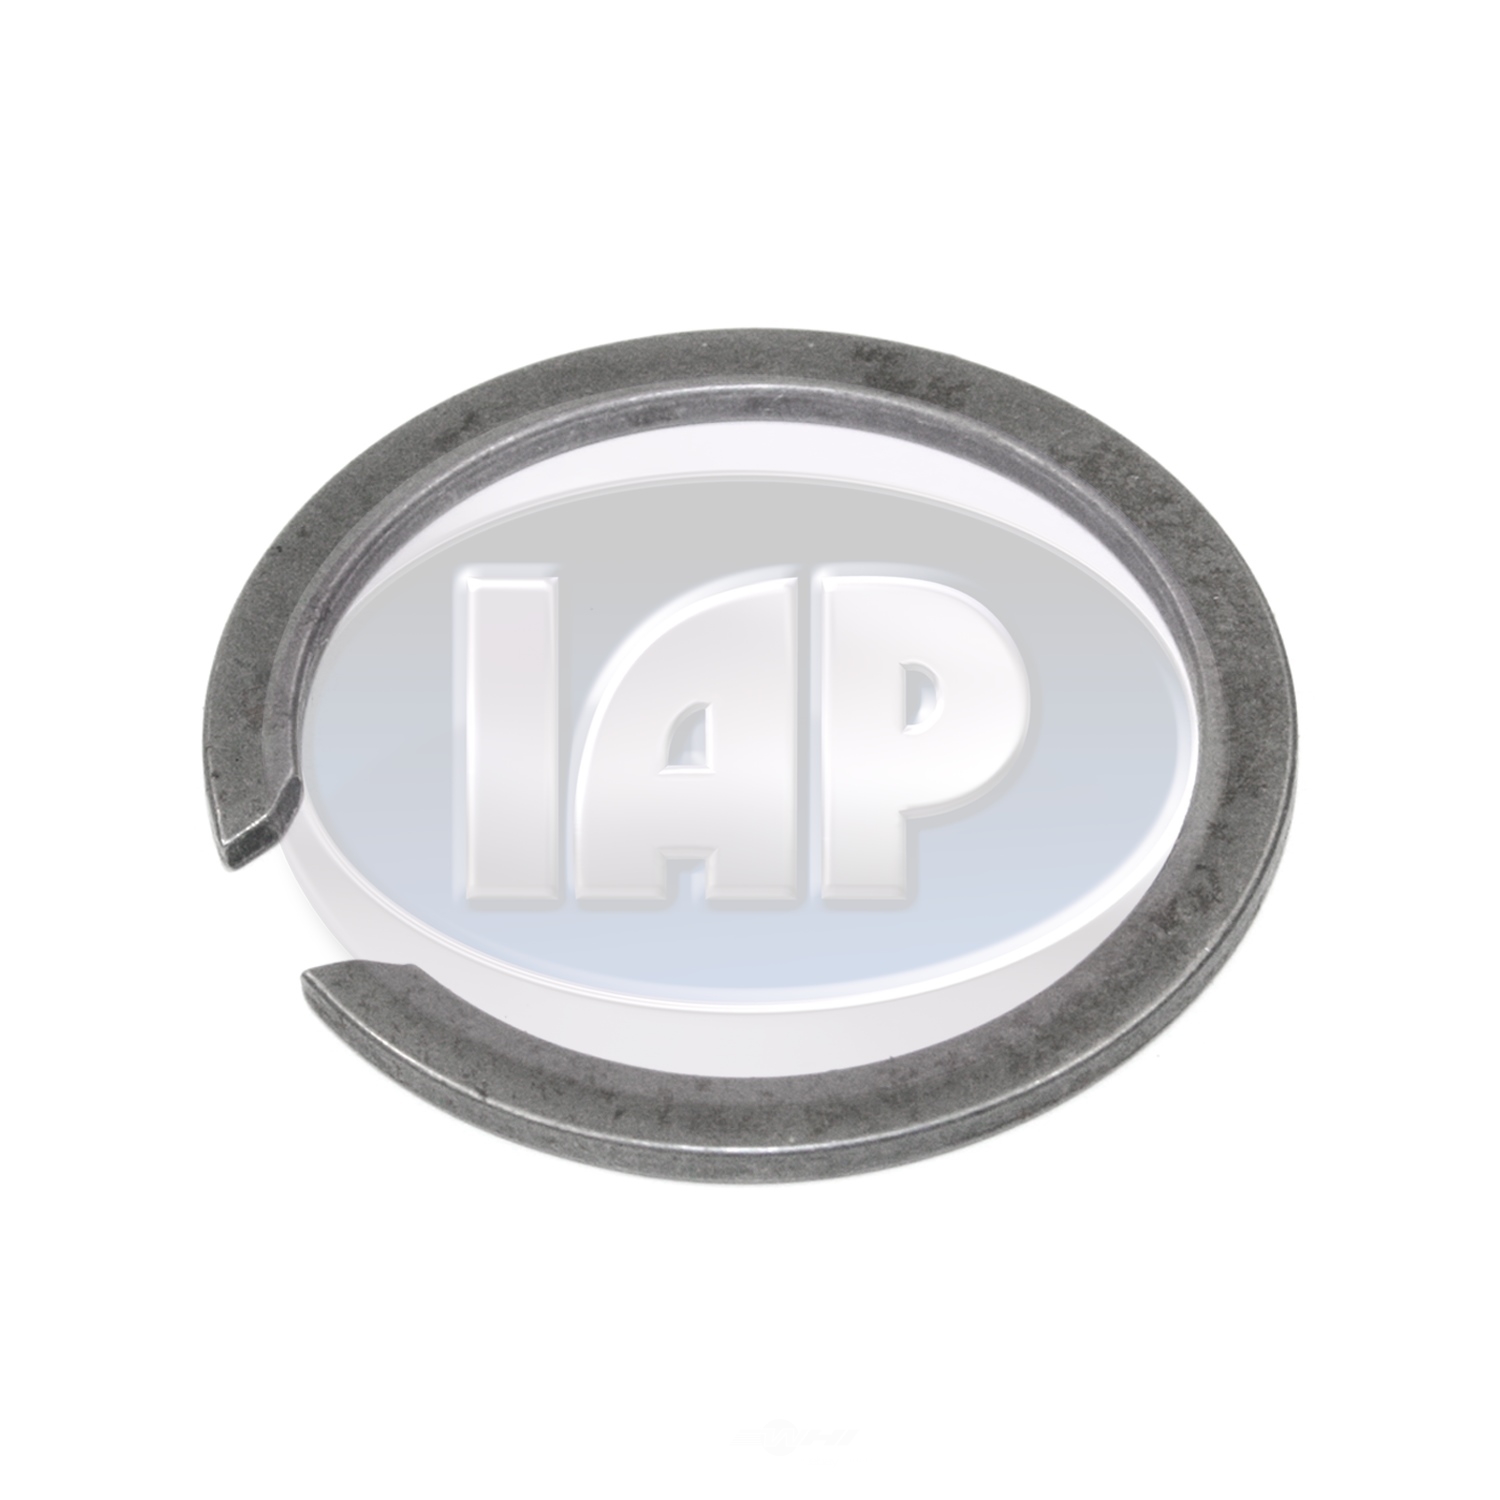 IAP/KUHLTEK MOTORWERKS - Engine Crankshaft Lock Key - KMS 111105227